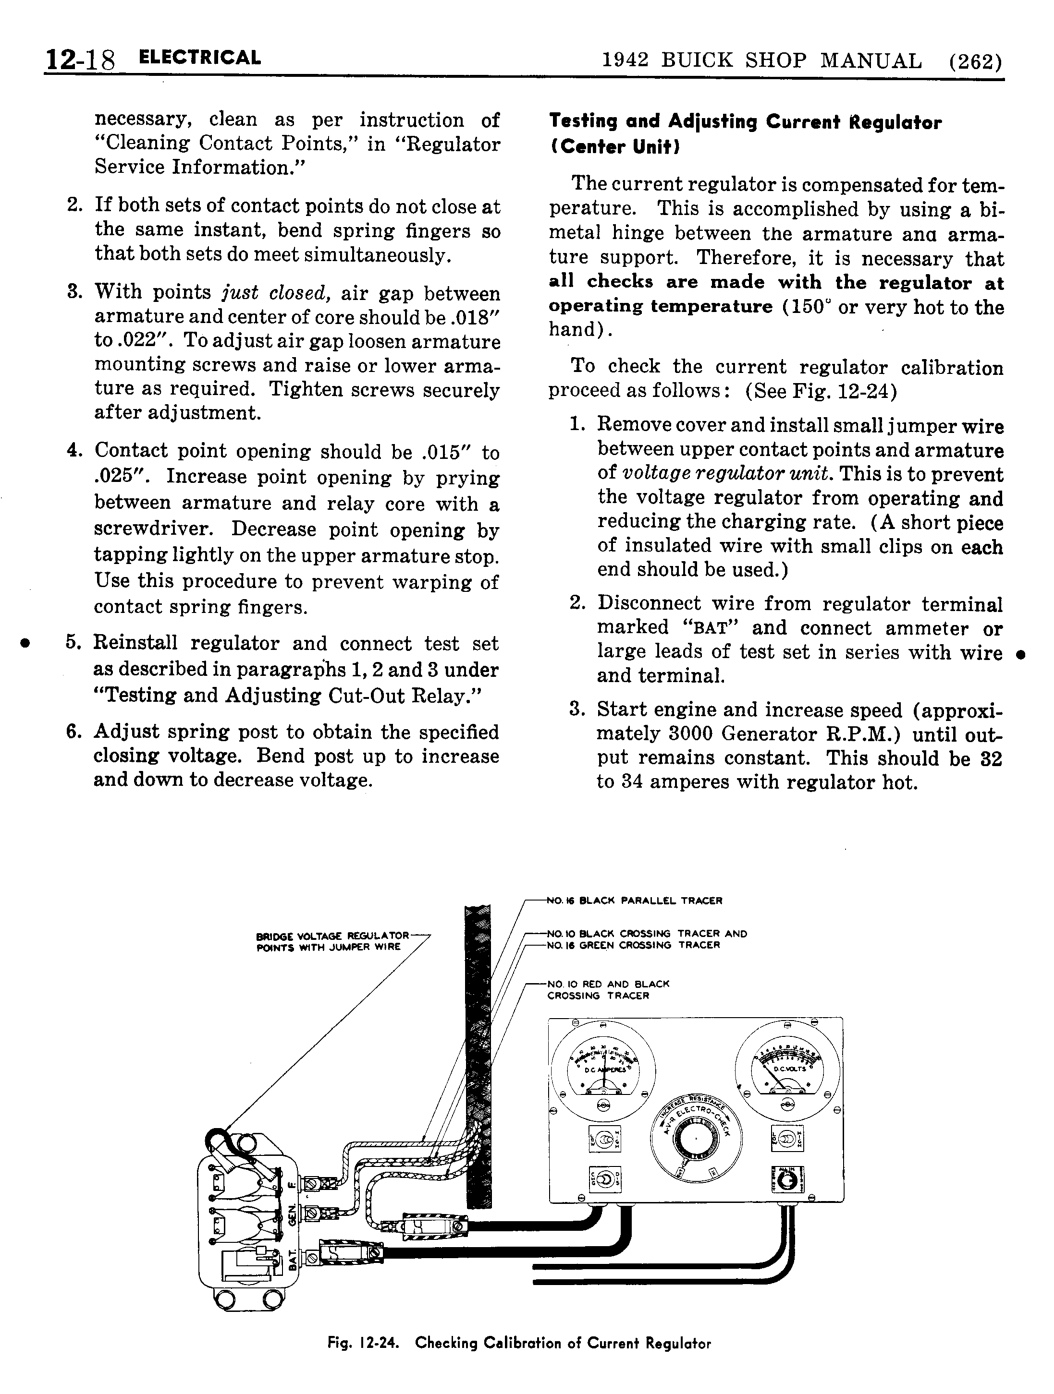 n_13 1942 Buick Shop Manual - Electrical System-018-018.jpg